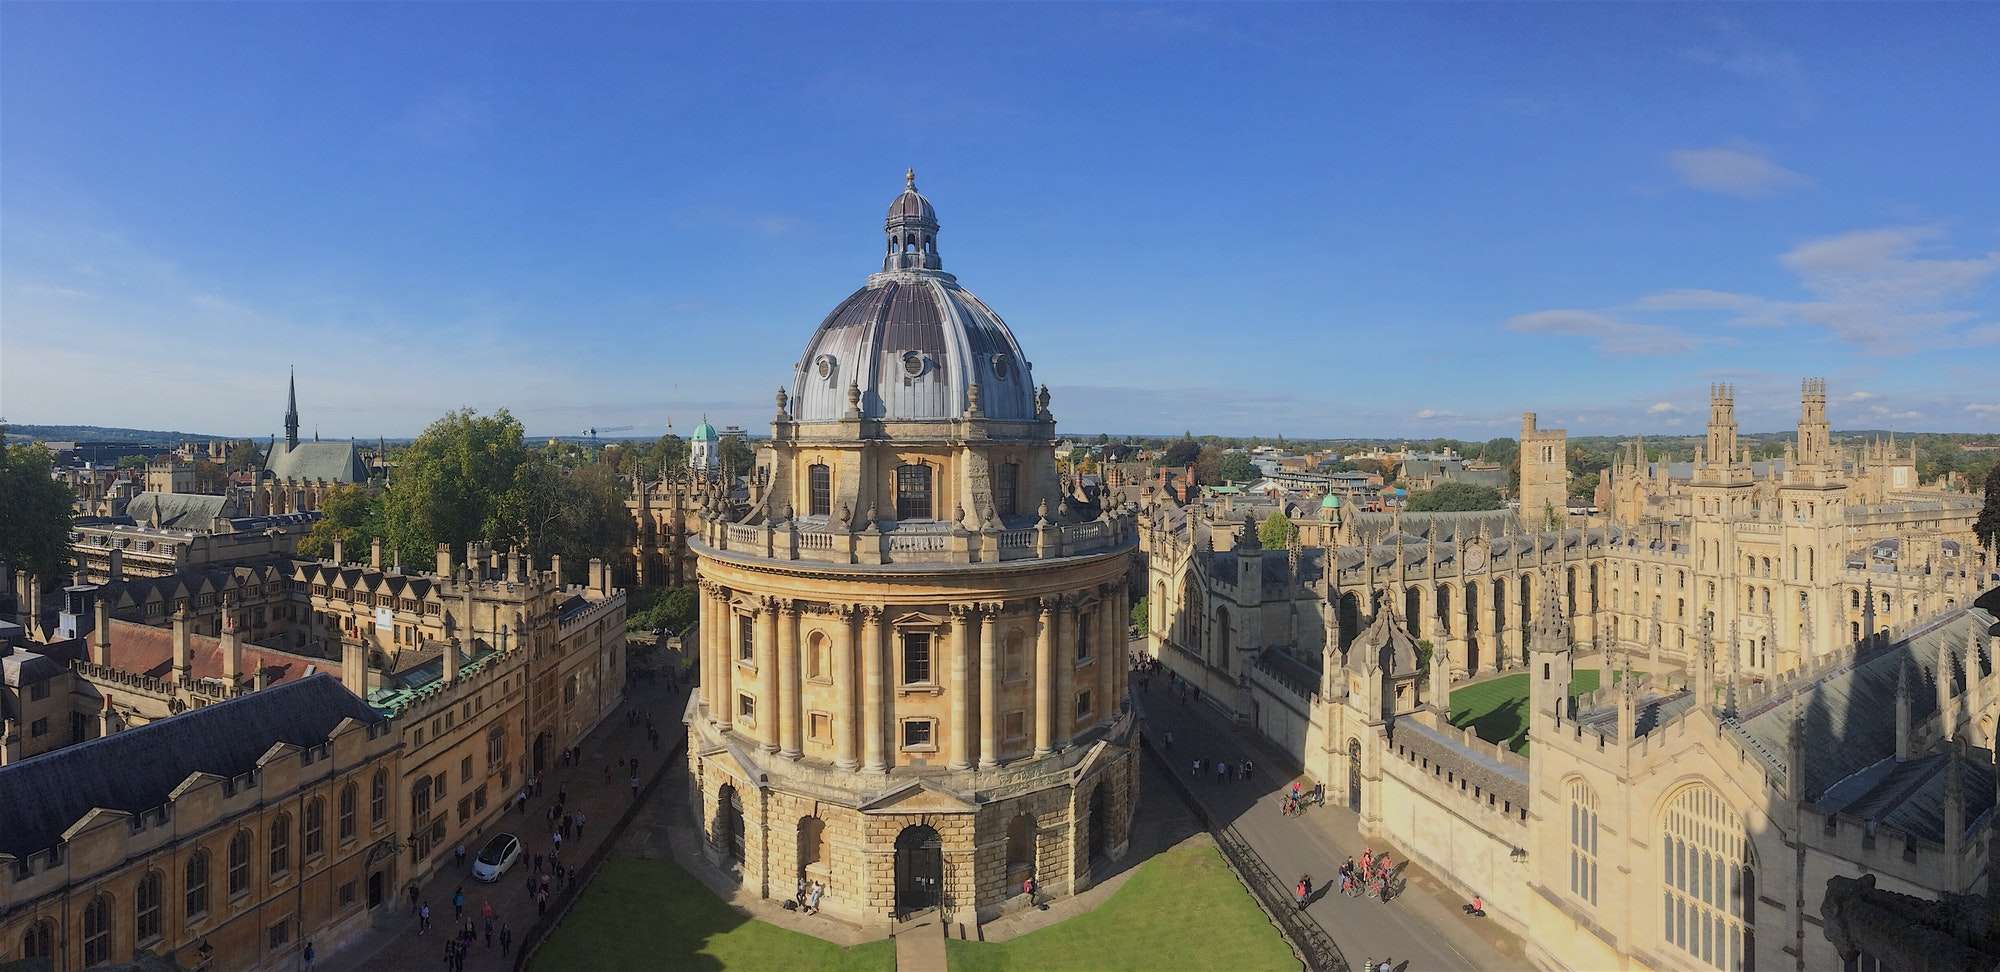 View at the Oxford University, Oxford, UN